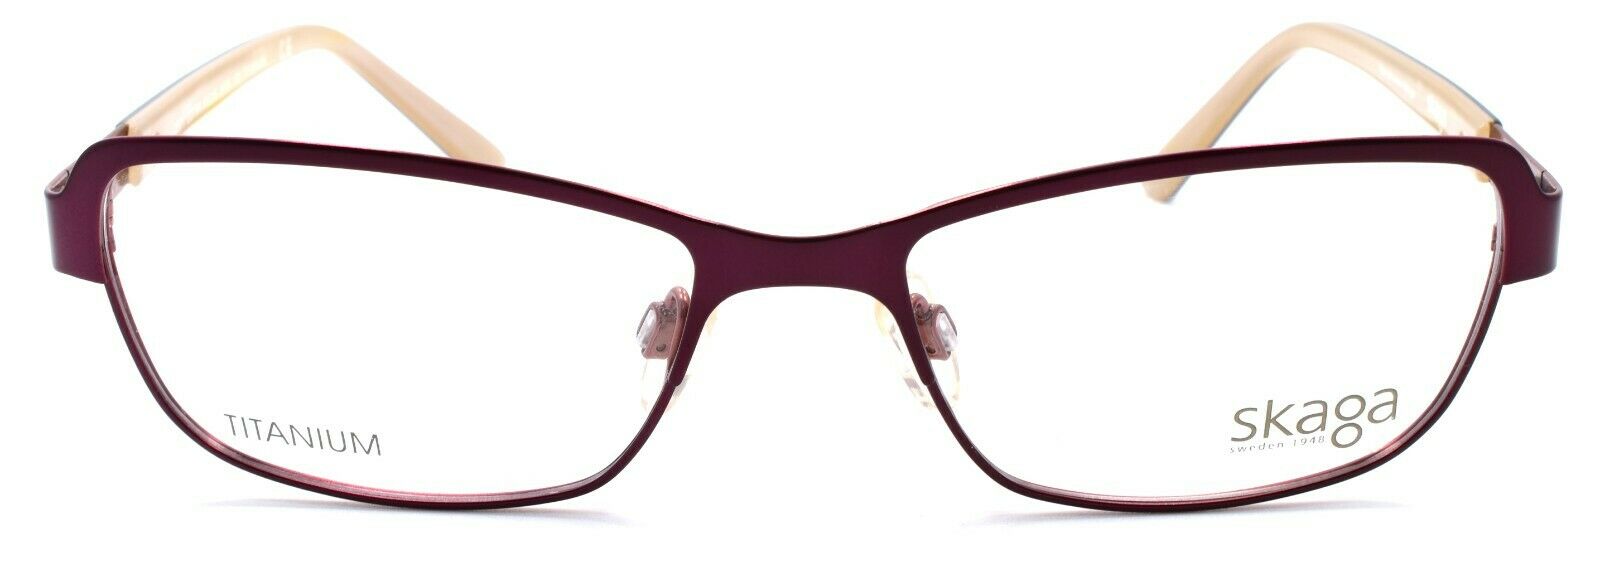 2-Skaga 3871 Lotta 5405 Women's Eyeglasses Frames TITANIUM 51-16-130 Burgundy-IKSpecs